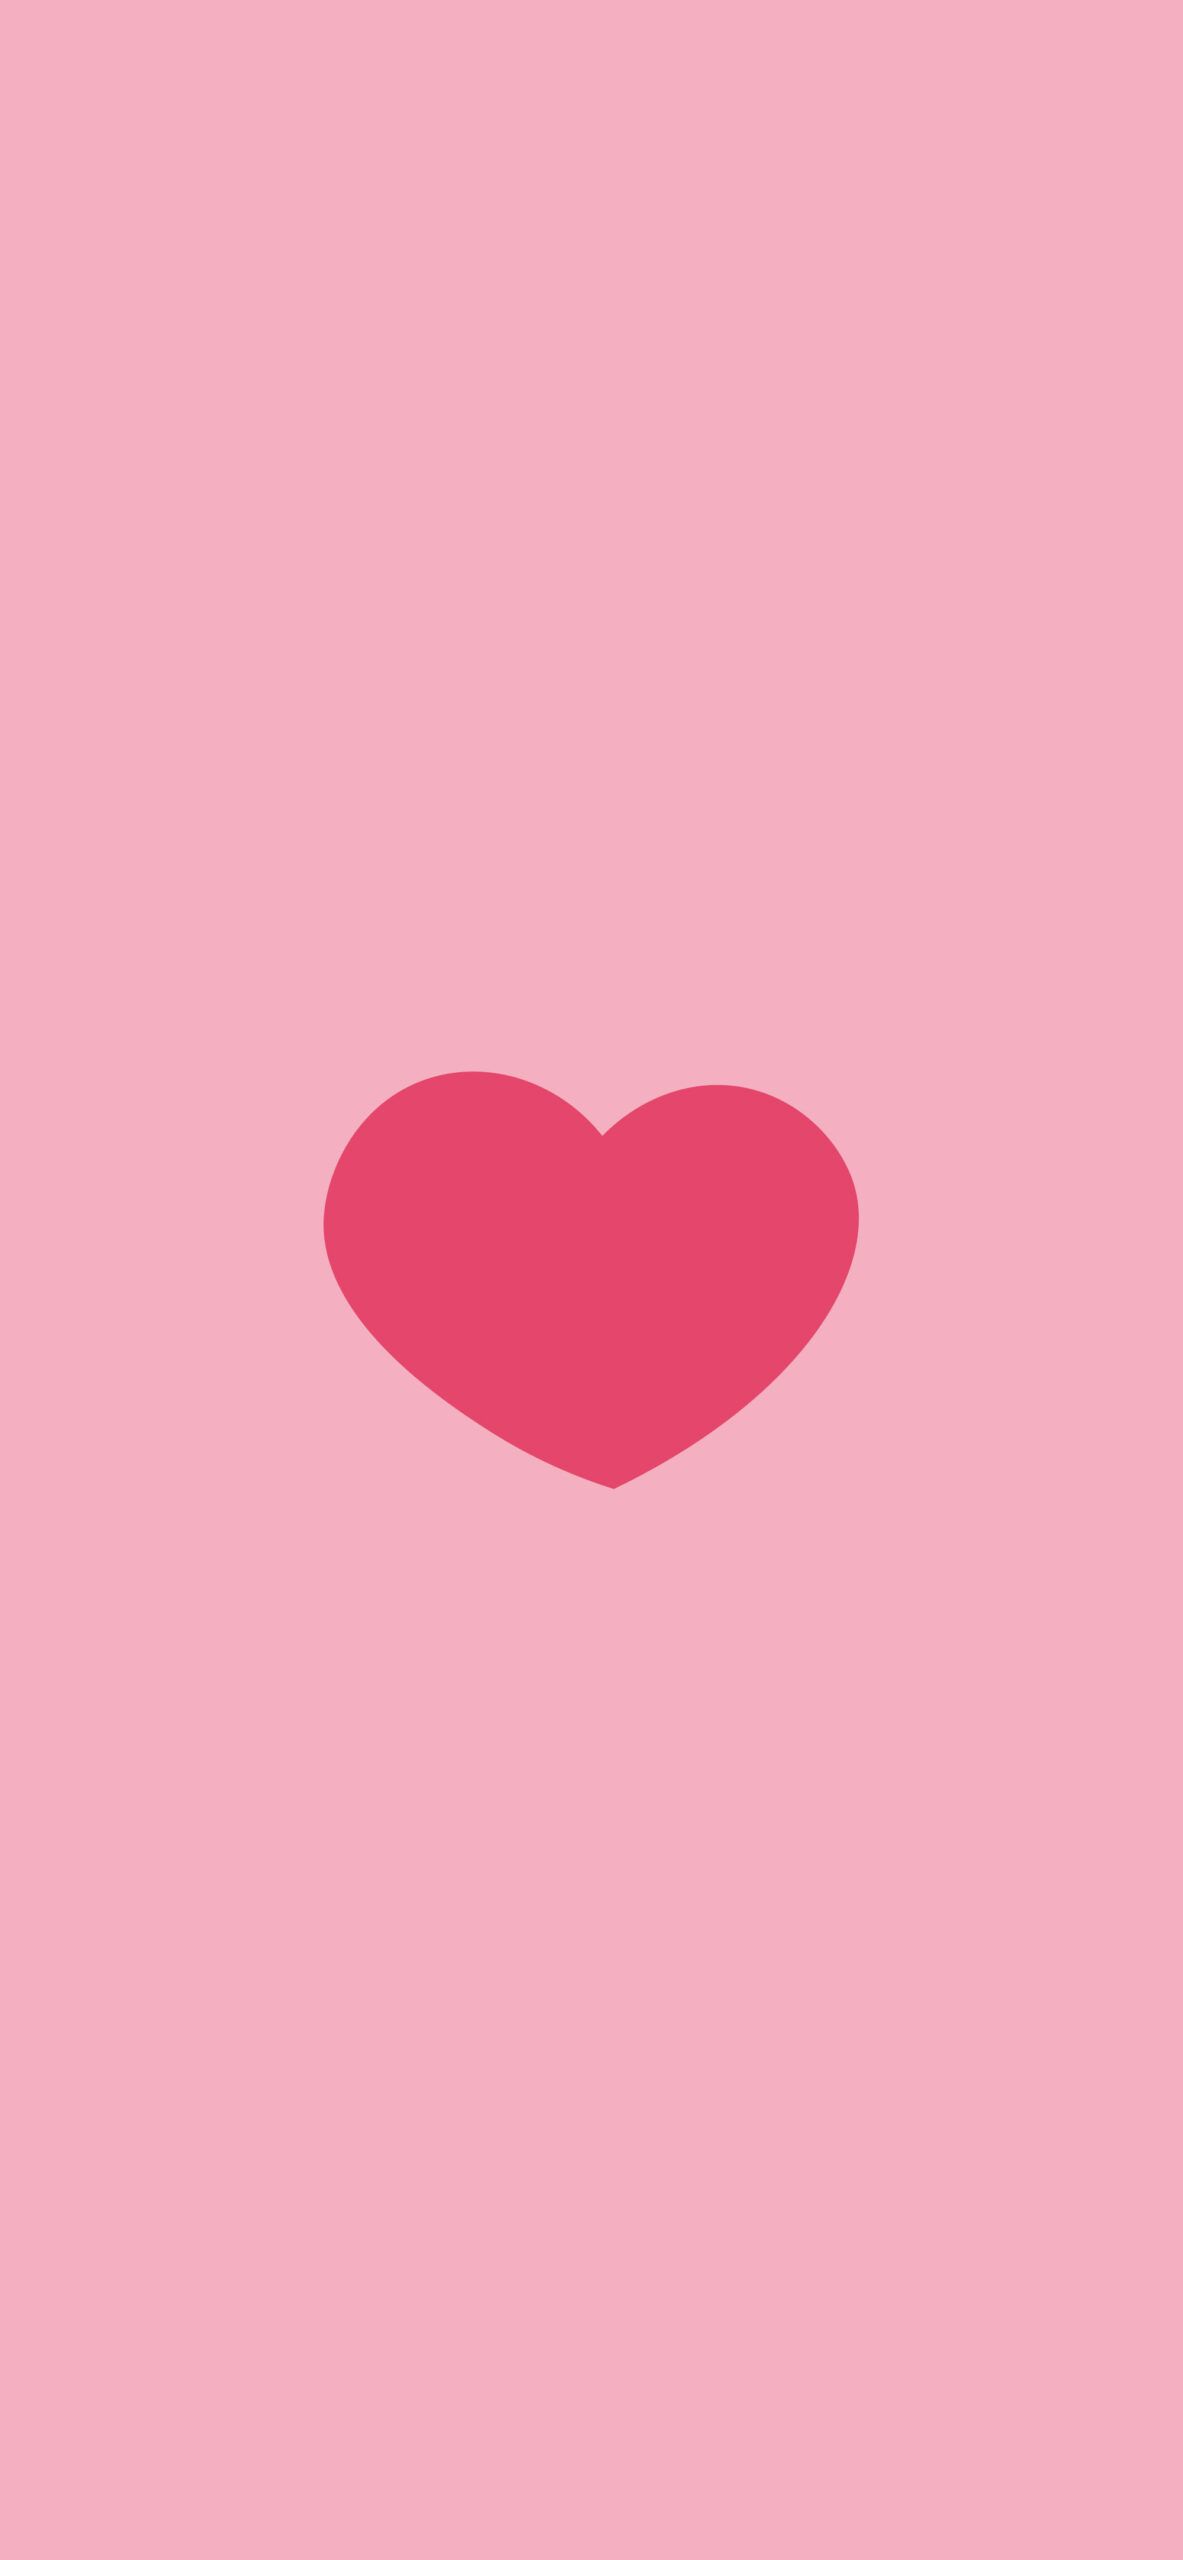  Love Hintergrundbild 1183x2560. Love Hearts Pattern Pink Wallpaper Heart Wallpaper 4k